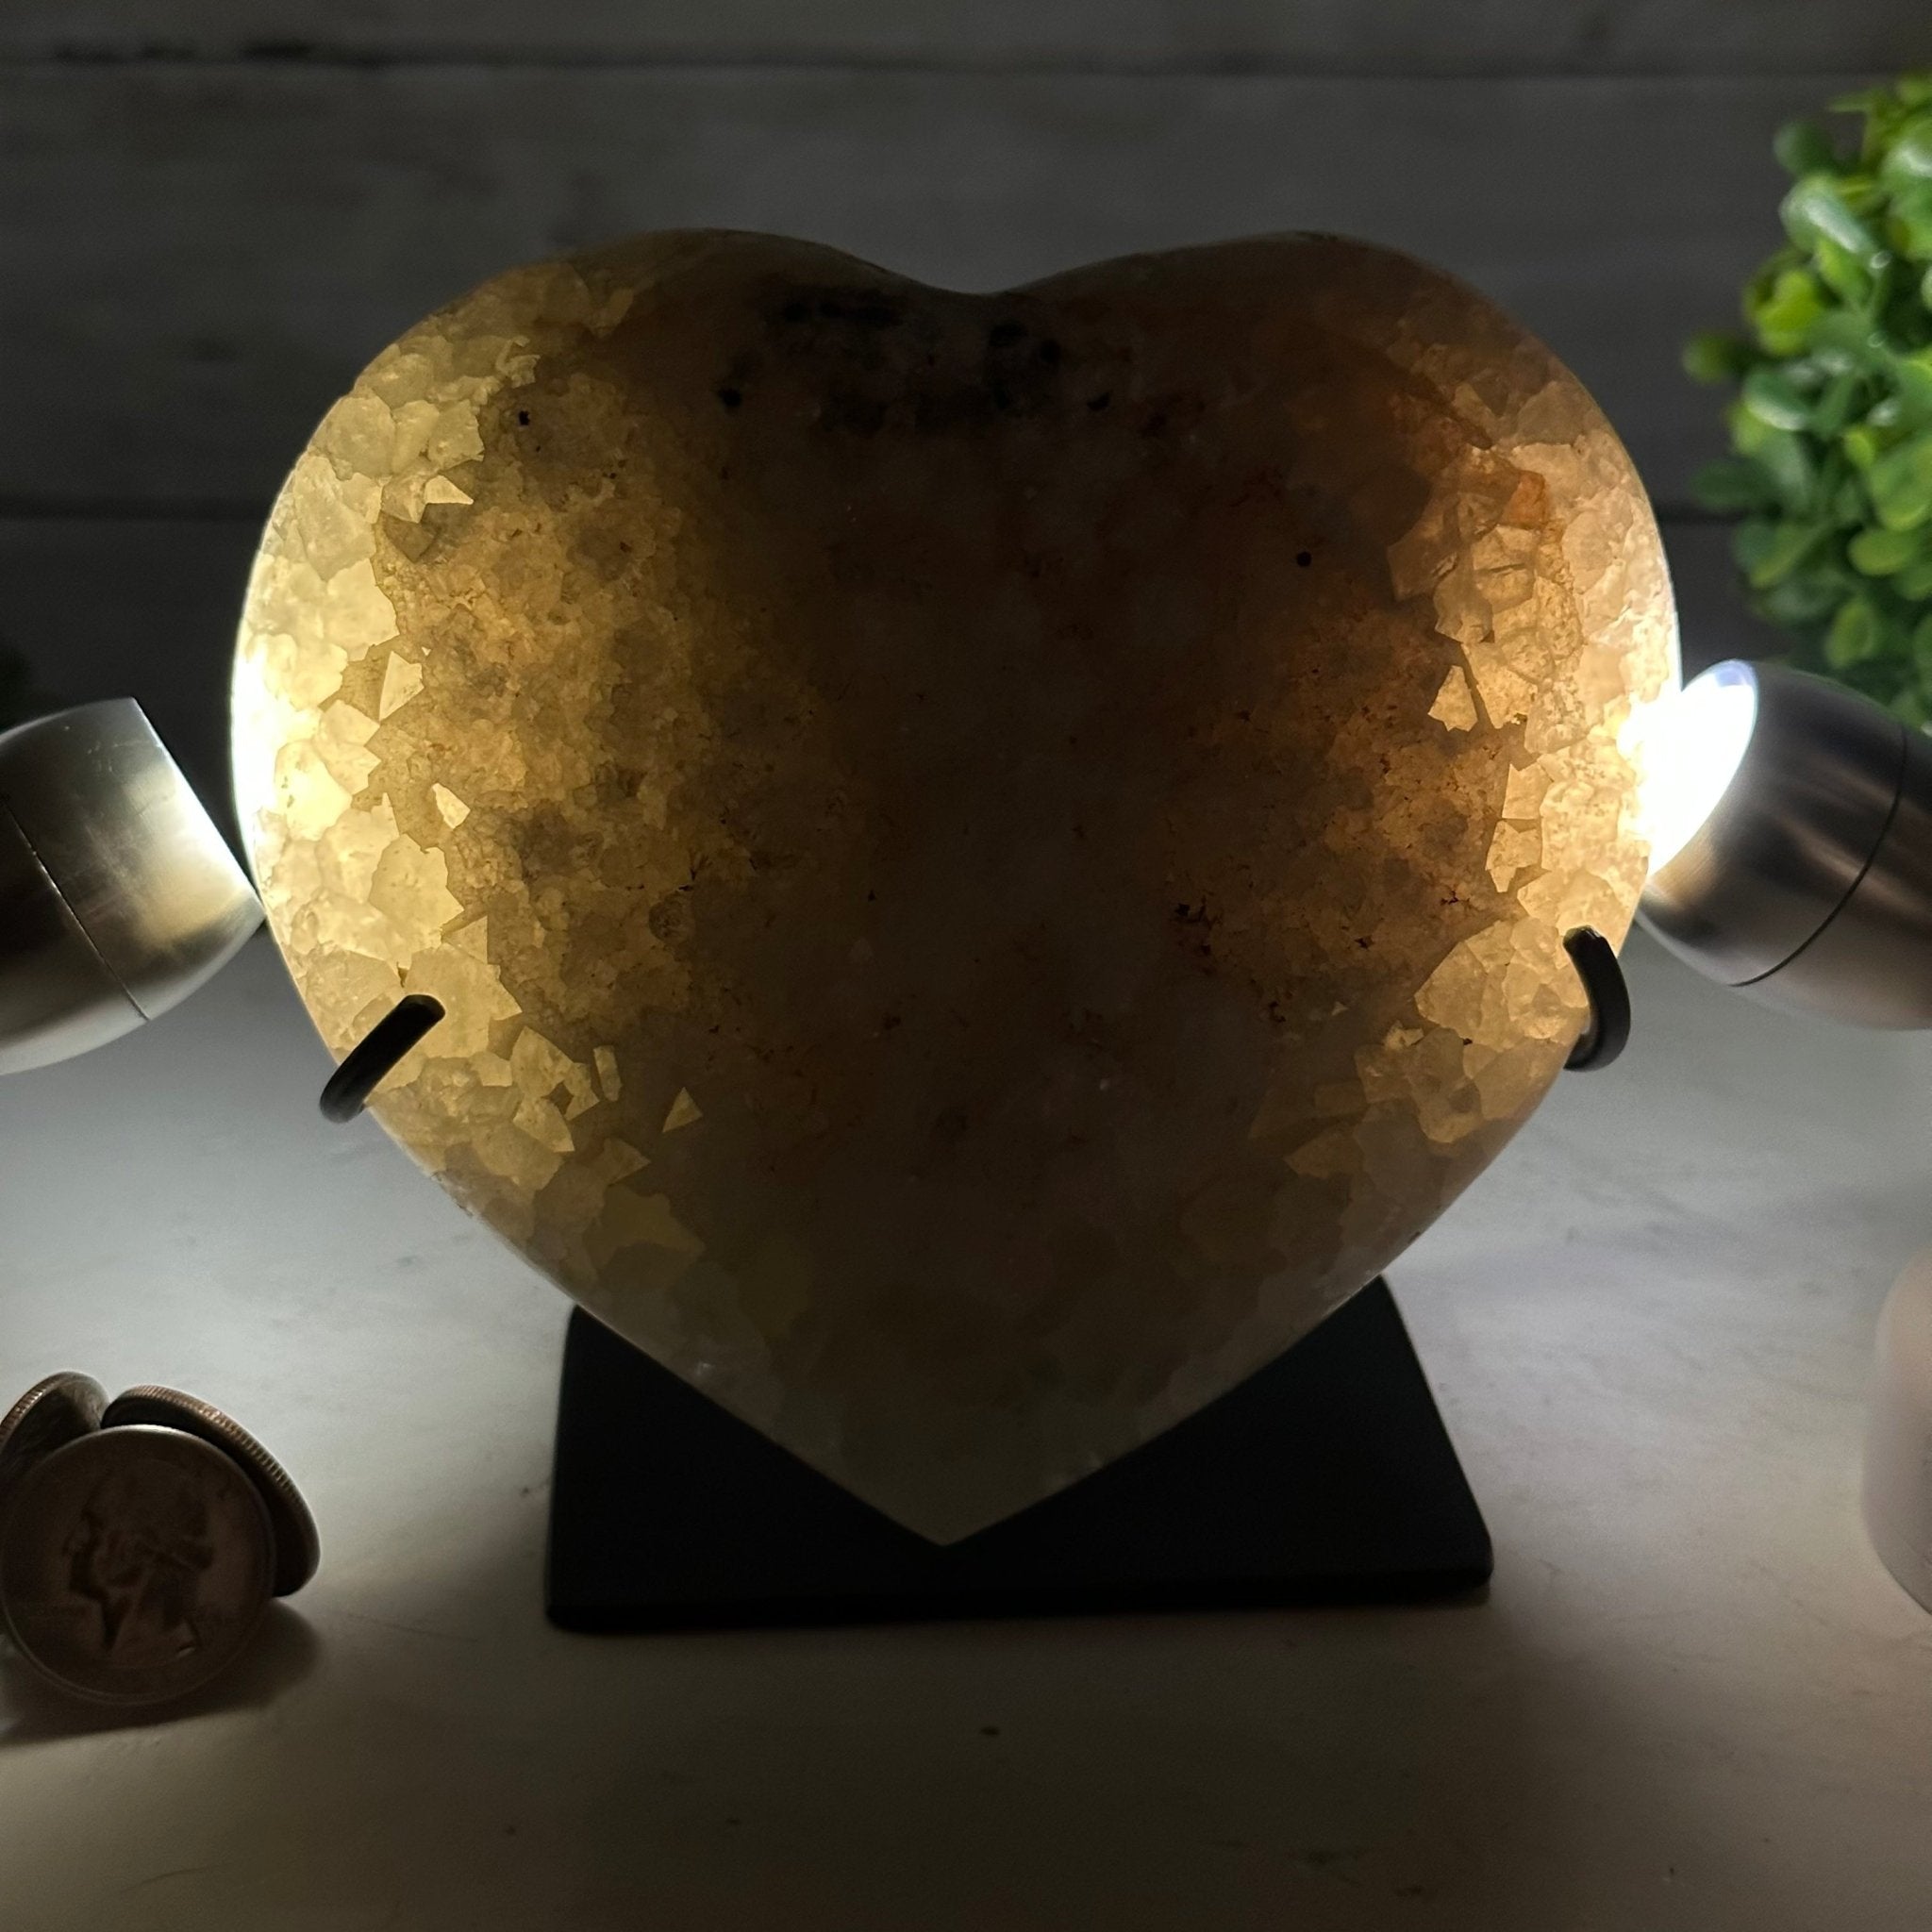 Polished Agate Heart Geode on a Metal Stand, 2.9 lbs & 5" Tall, Model #5468-0031 by Brazil Gems - Brazil GemsBrazil GemsPolished Agate Heart Geode on a Metal Stand, 2.9 lbs & 5" Tall, Model #5468-0031 by Brazil GemsHearts5468-0031